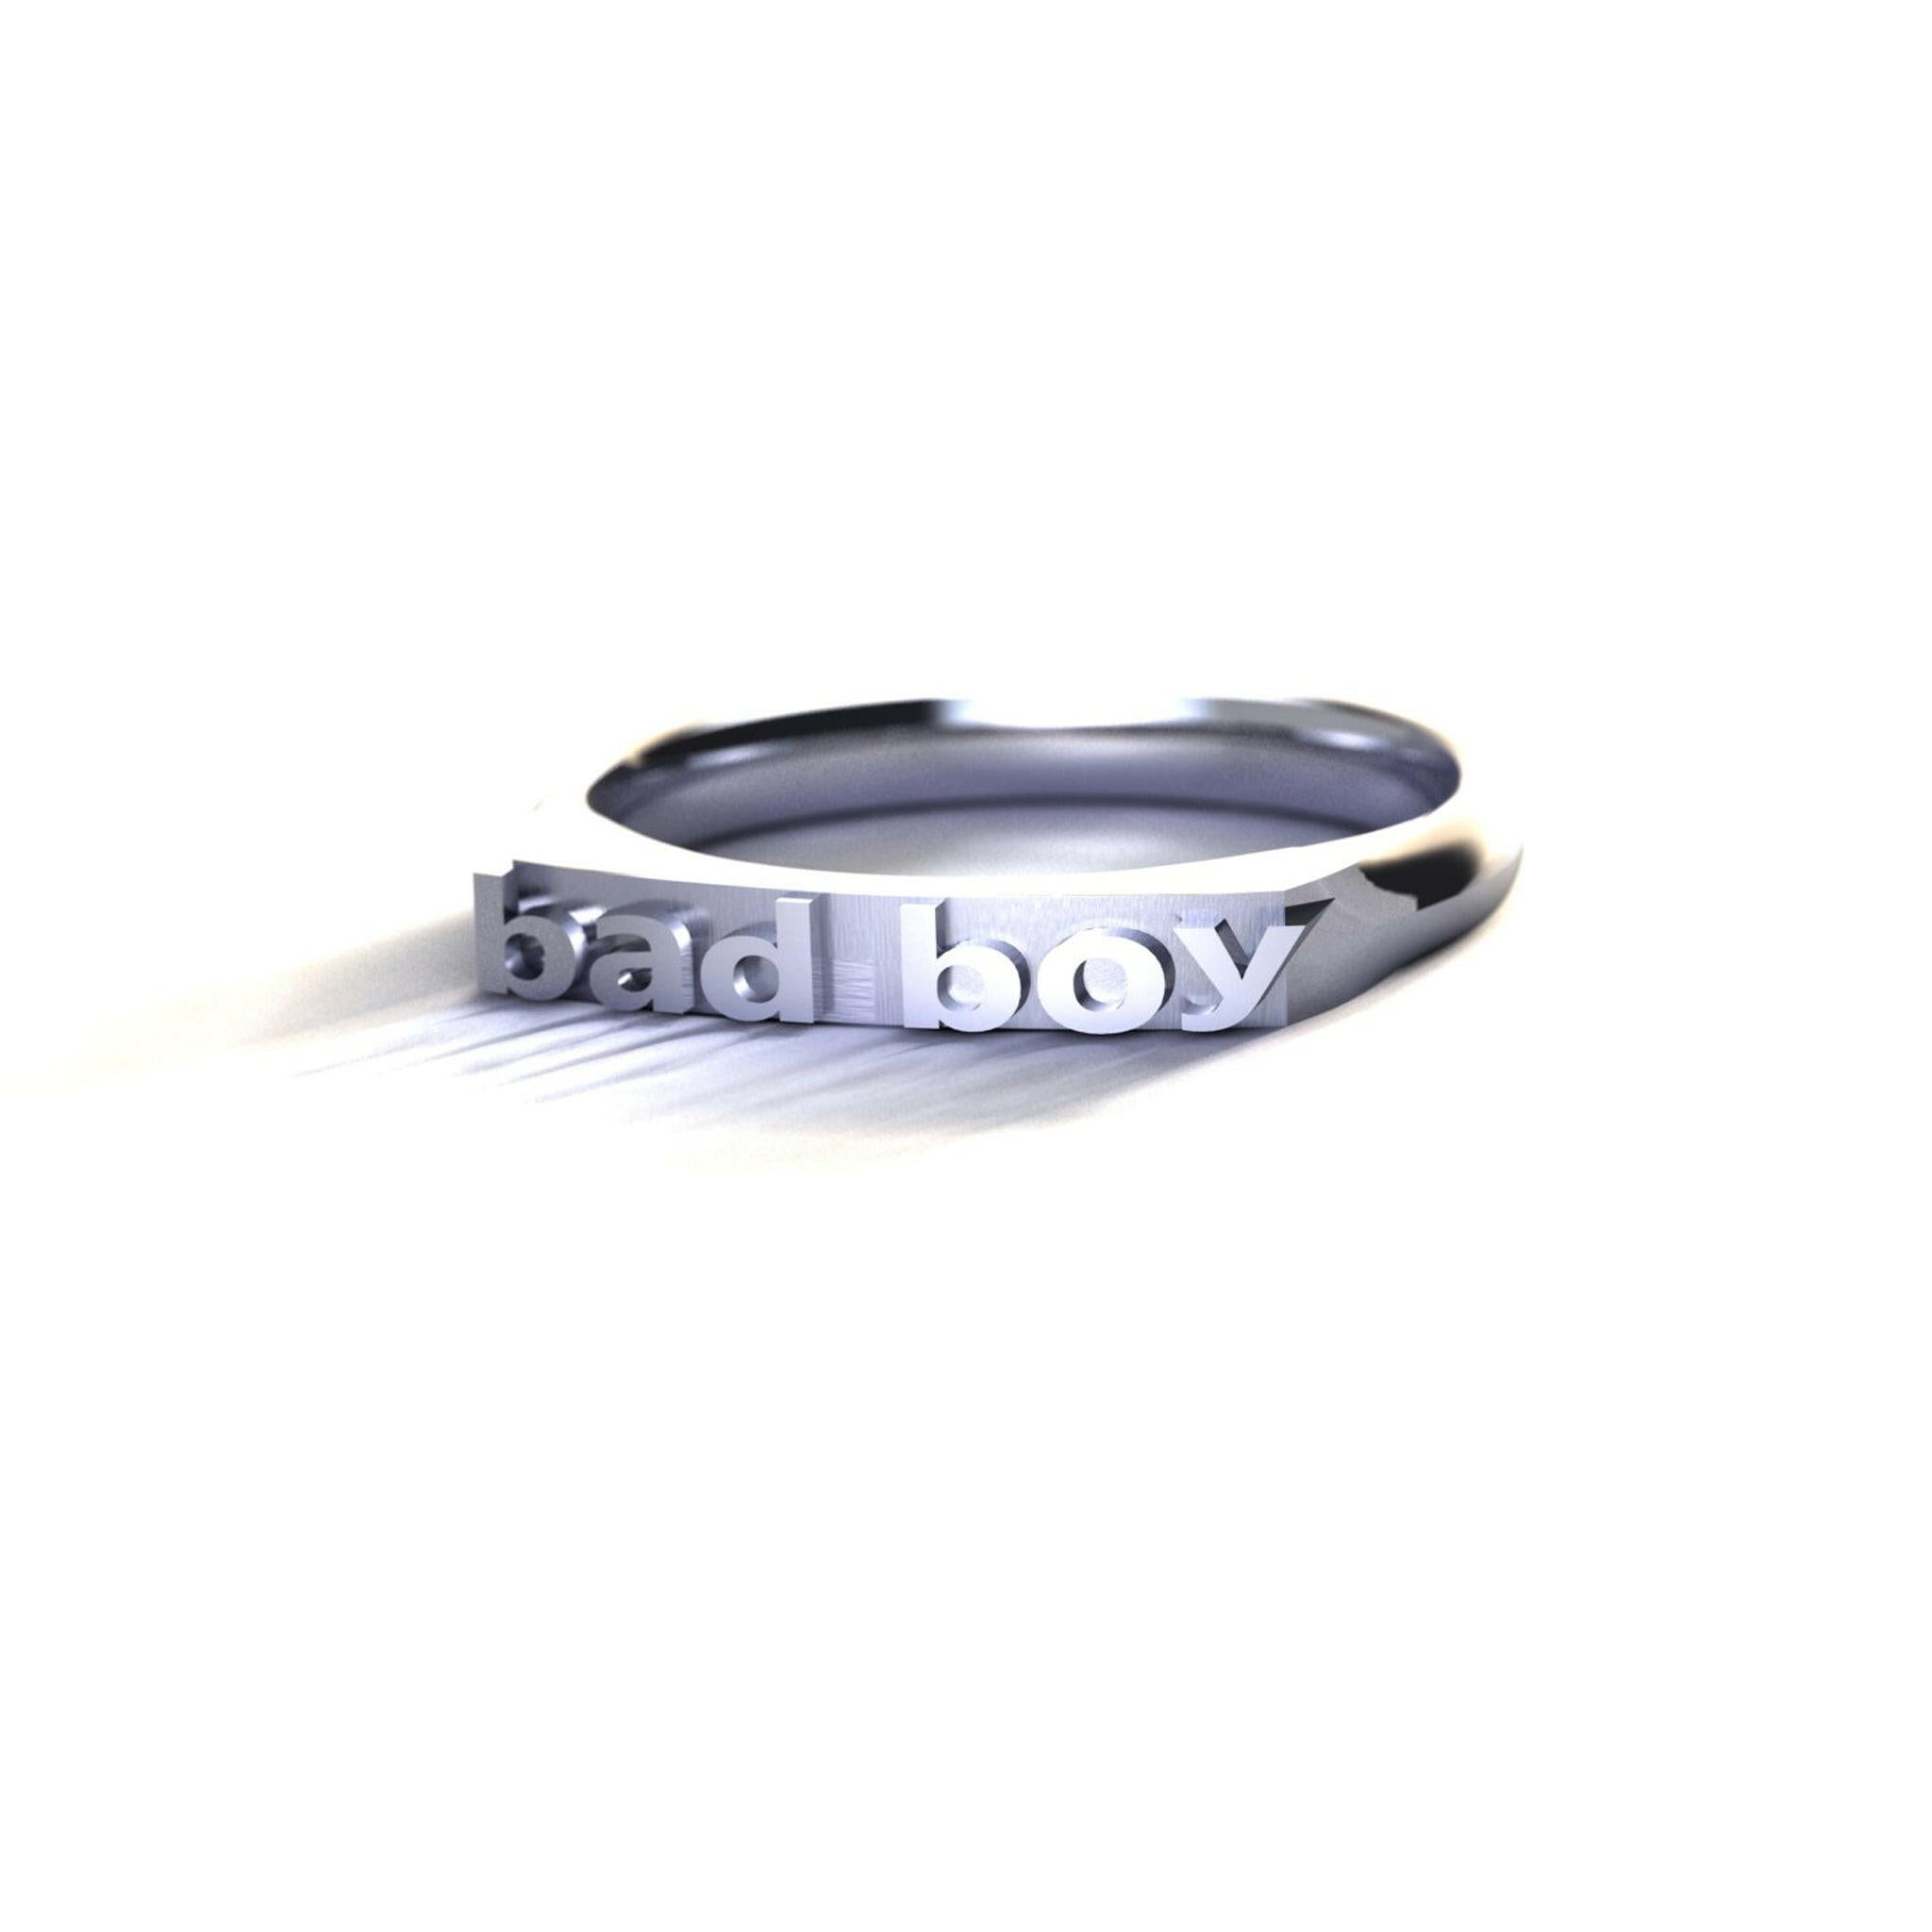 bad boy - Ilah Cibis Jewelry-Rings